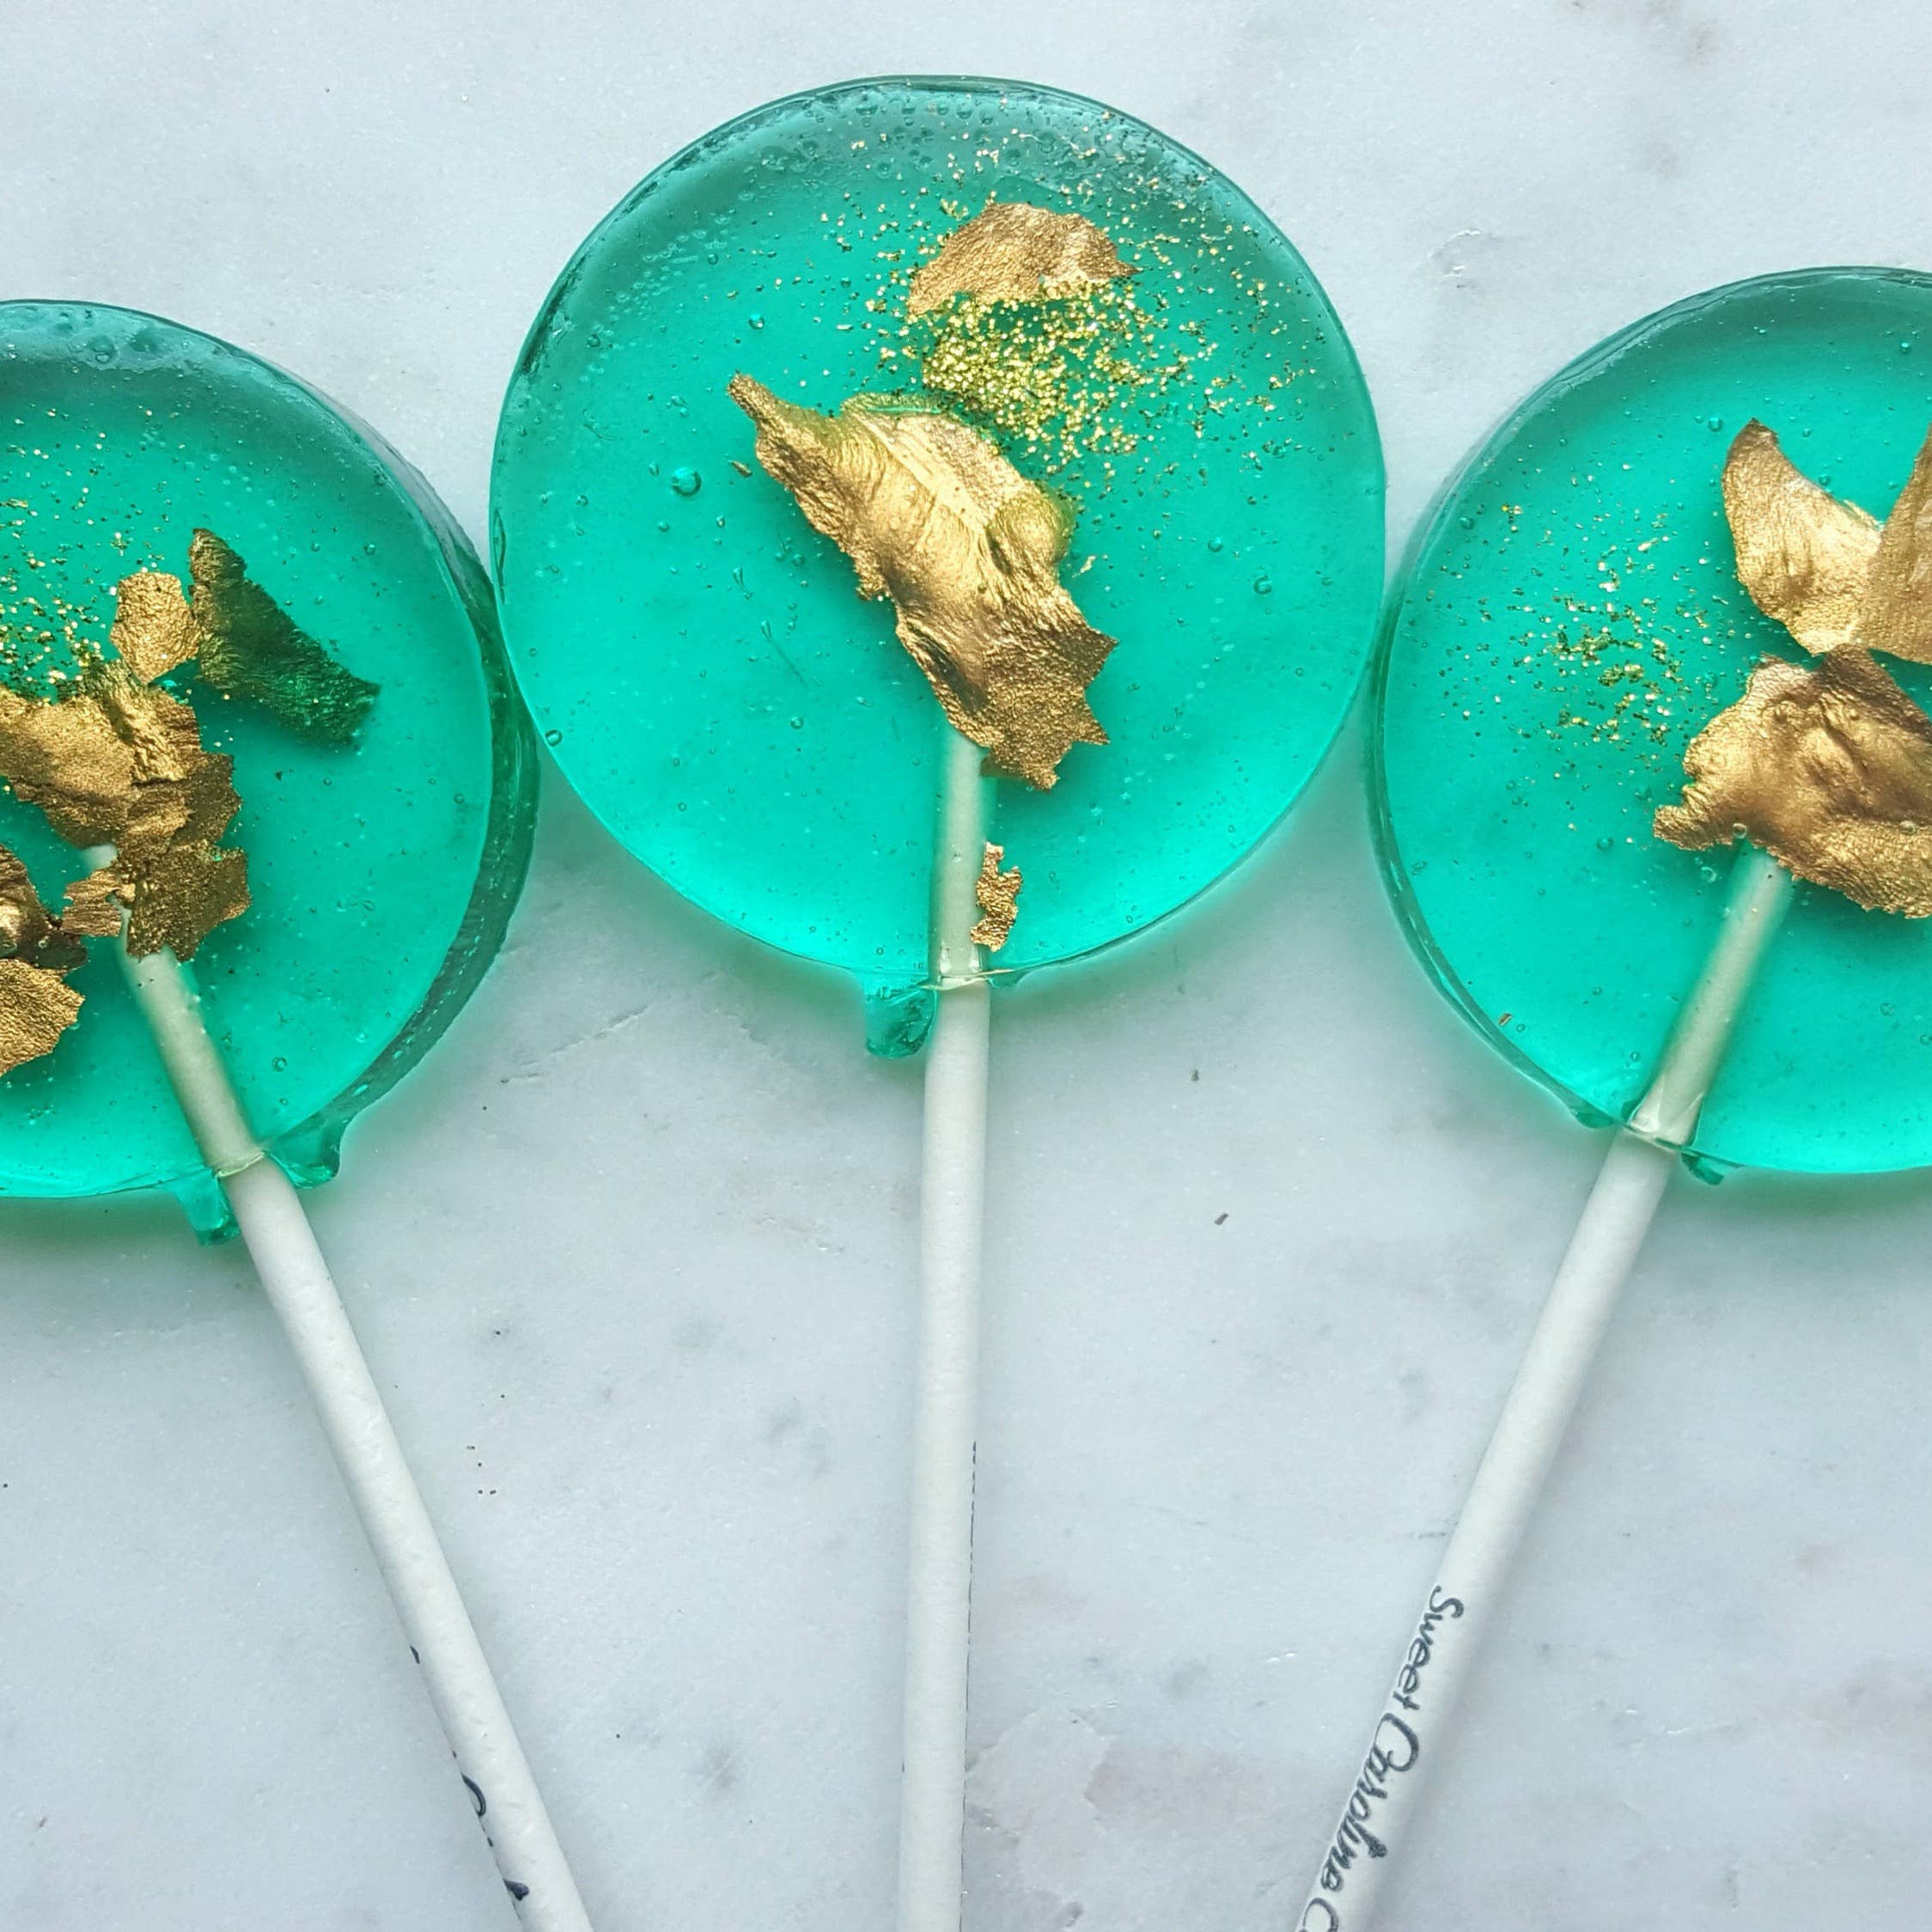 Sweet Caroline Confections - Teal and Gold Sparkle Lollipops, Green Apple